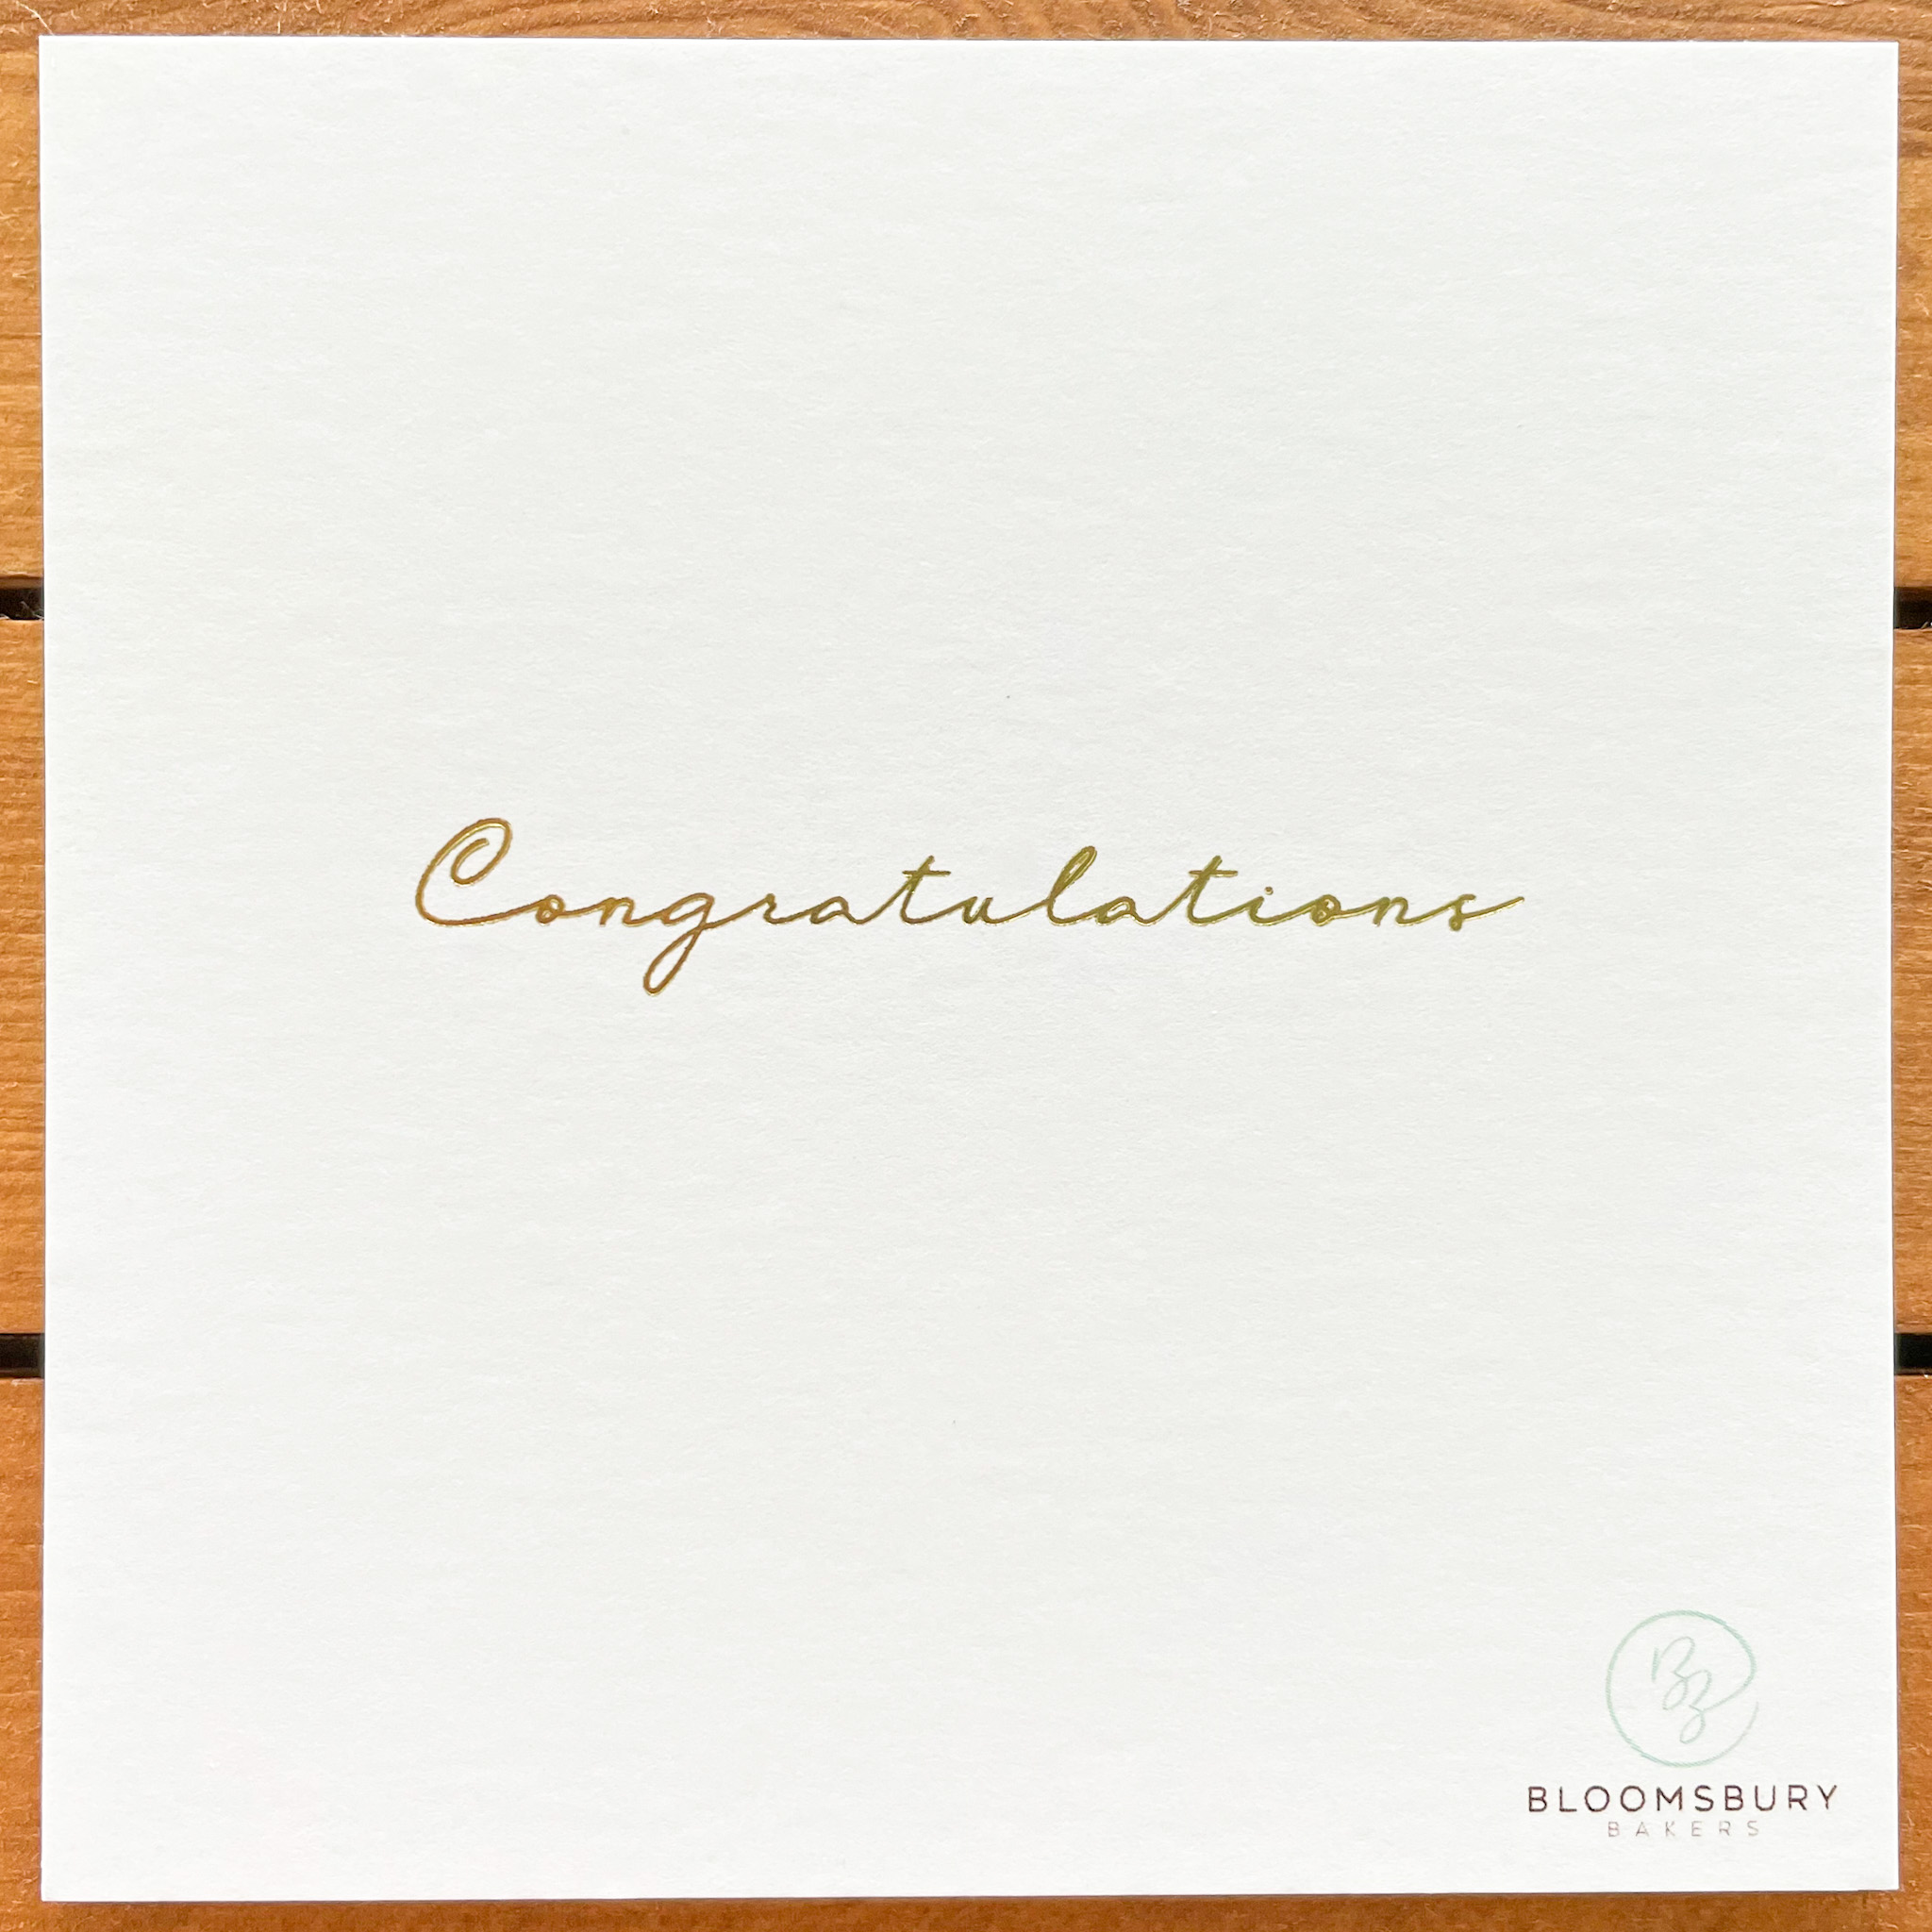 Congratulations Card (Gold Words)